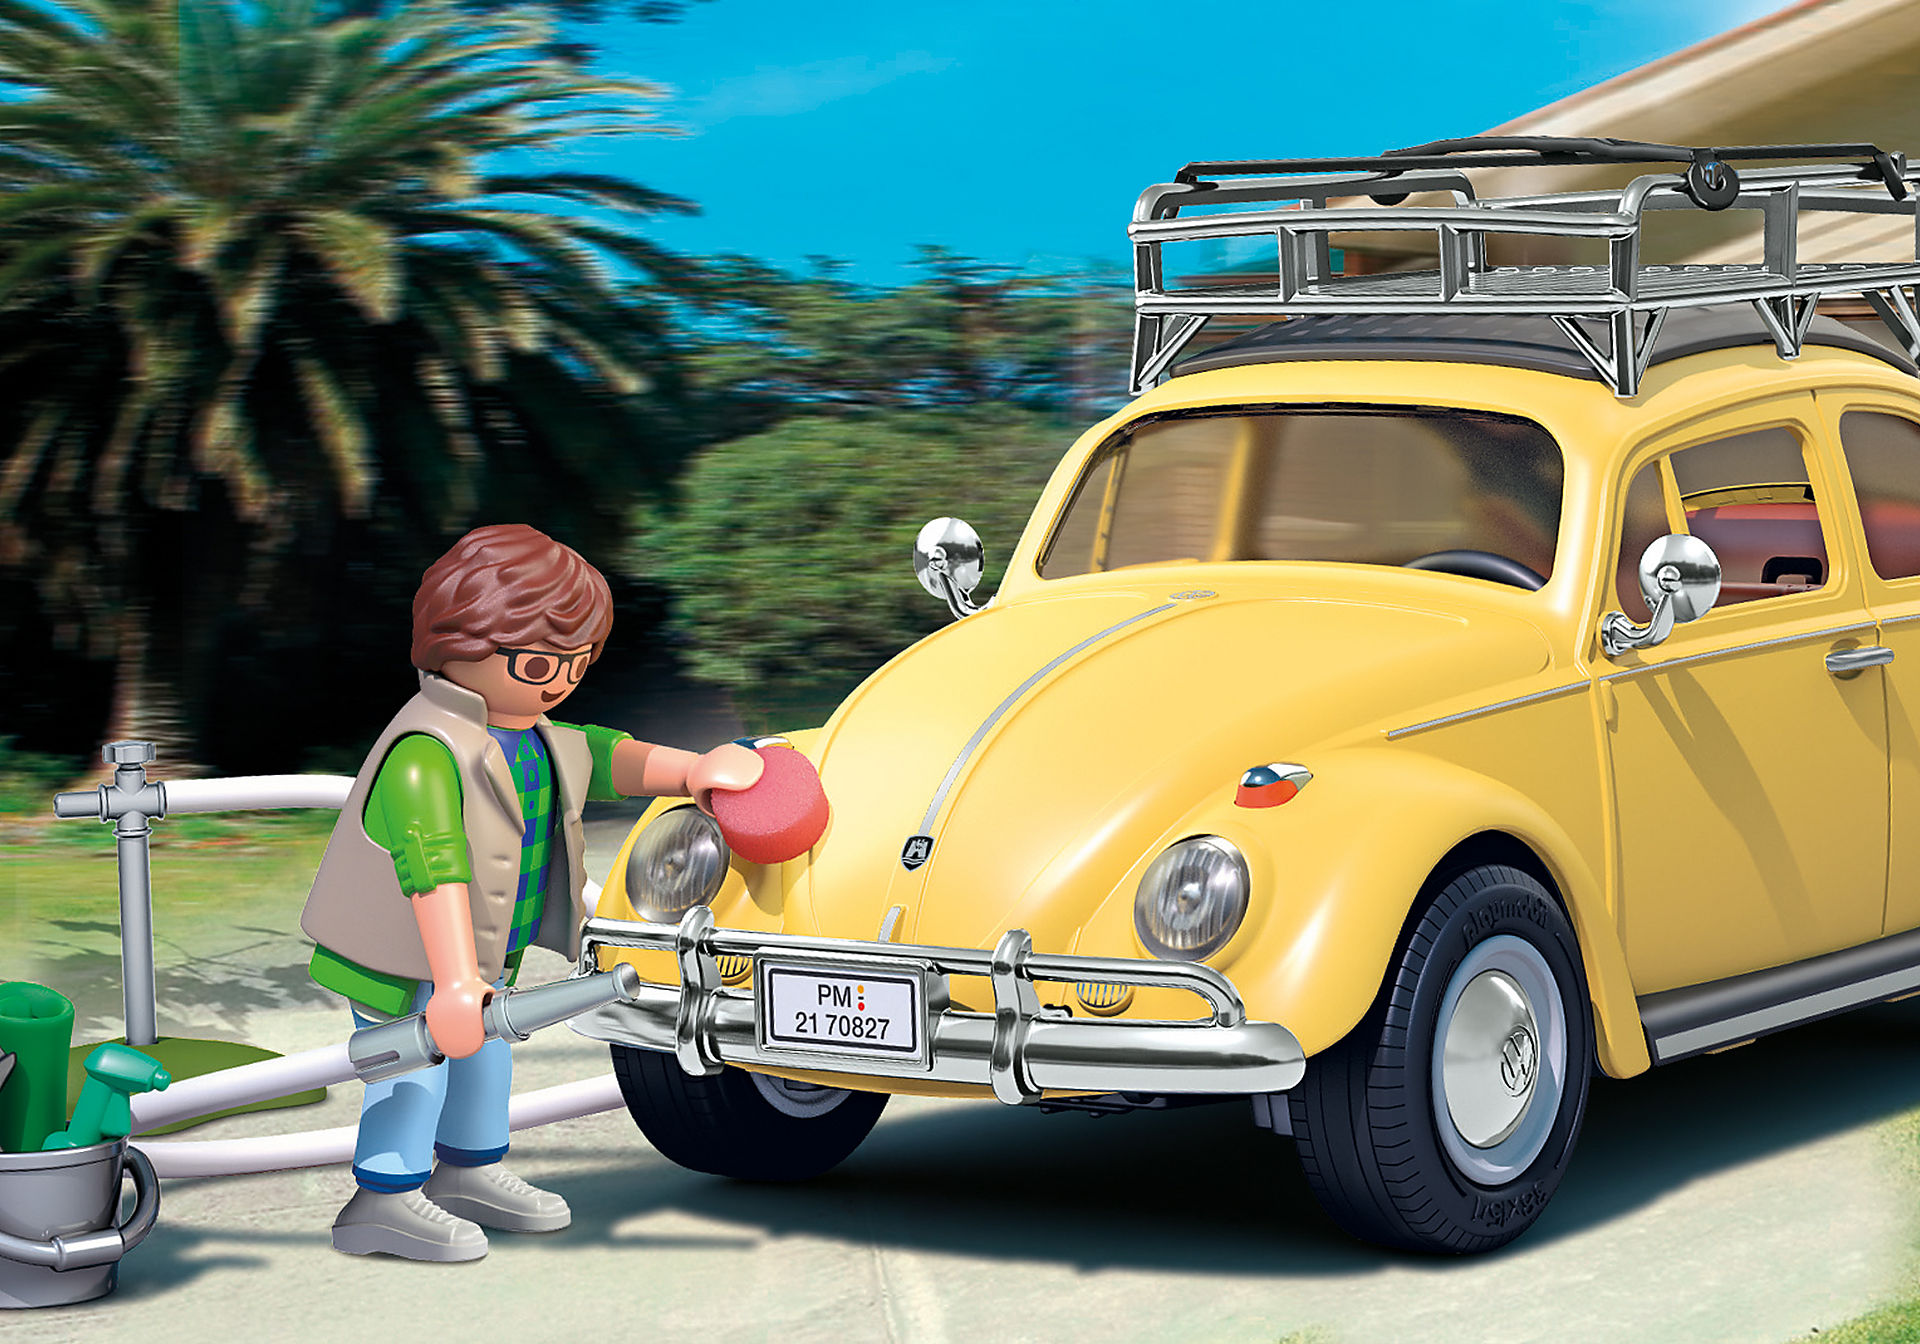 70827 Volkswagen Beetle - Edição especial zoom image7